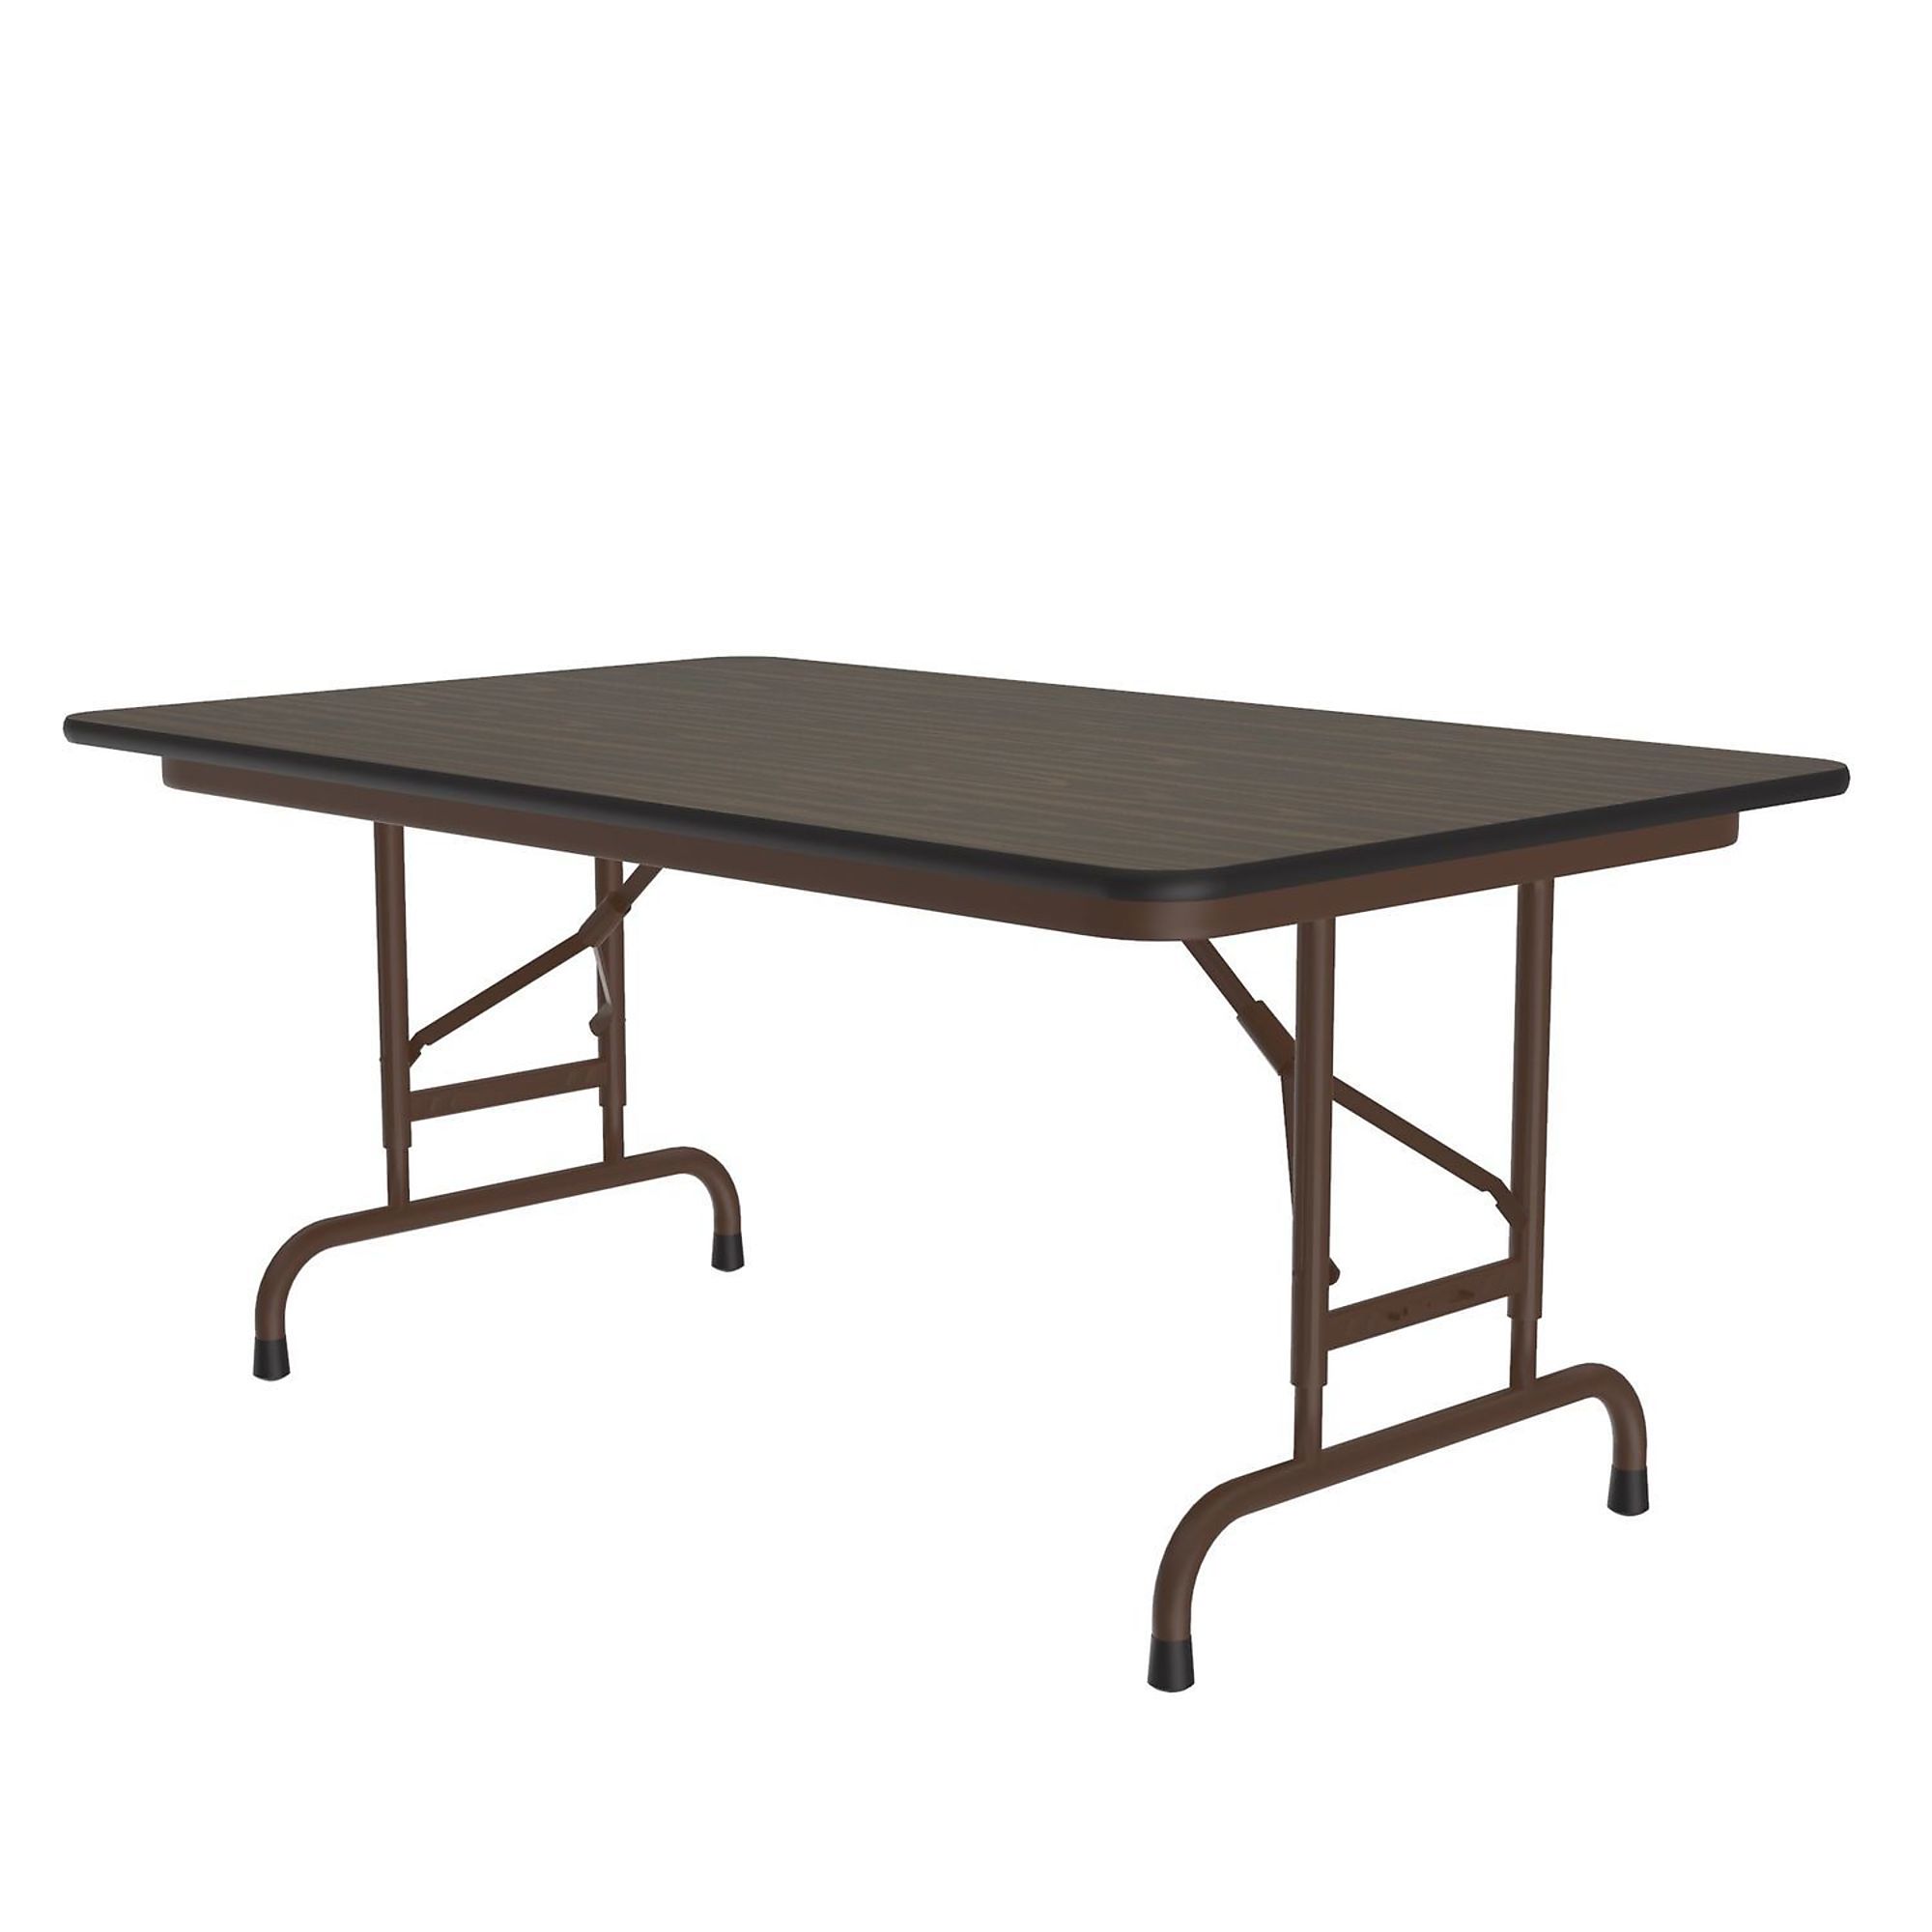 Correll, Adjustable TFL Folding Table, Walnut, 30x48, Height 32 in, Width 30 in, Length 48 in, Model CFA3048TF-01